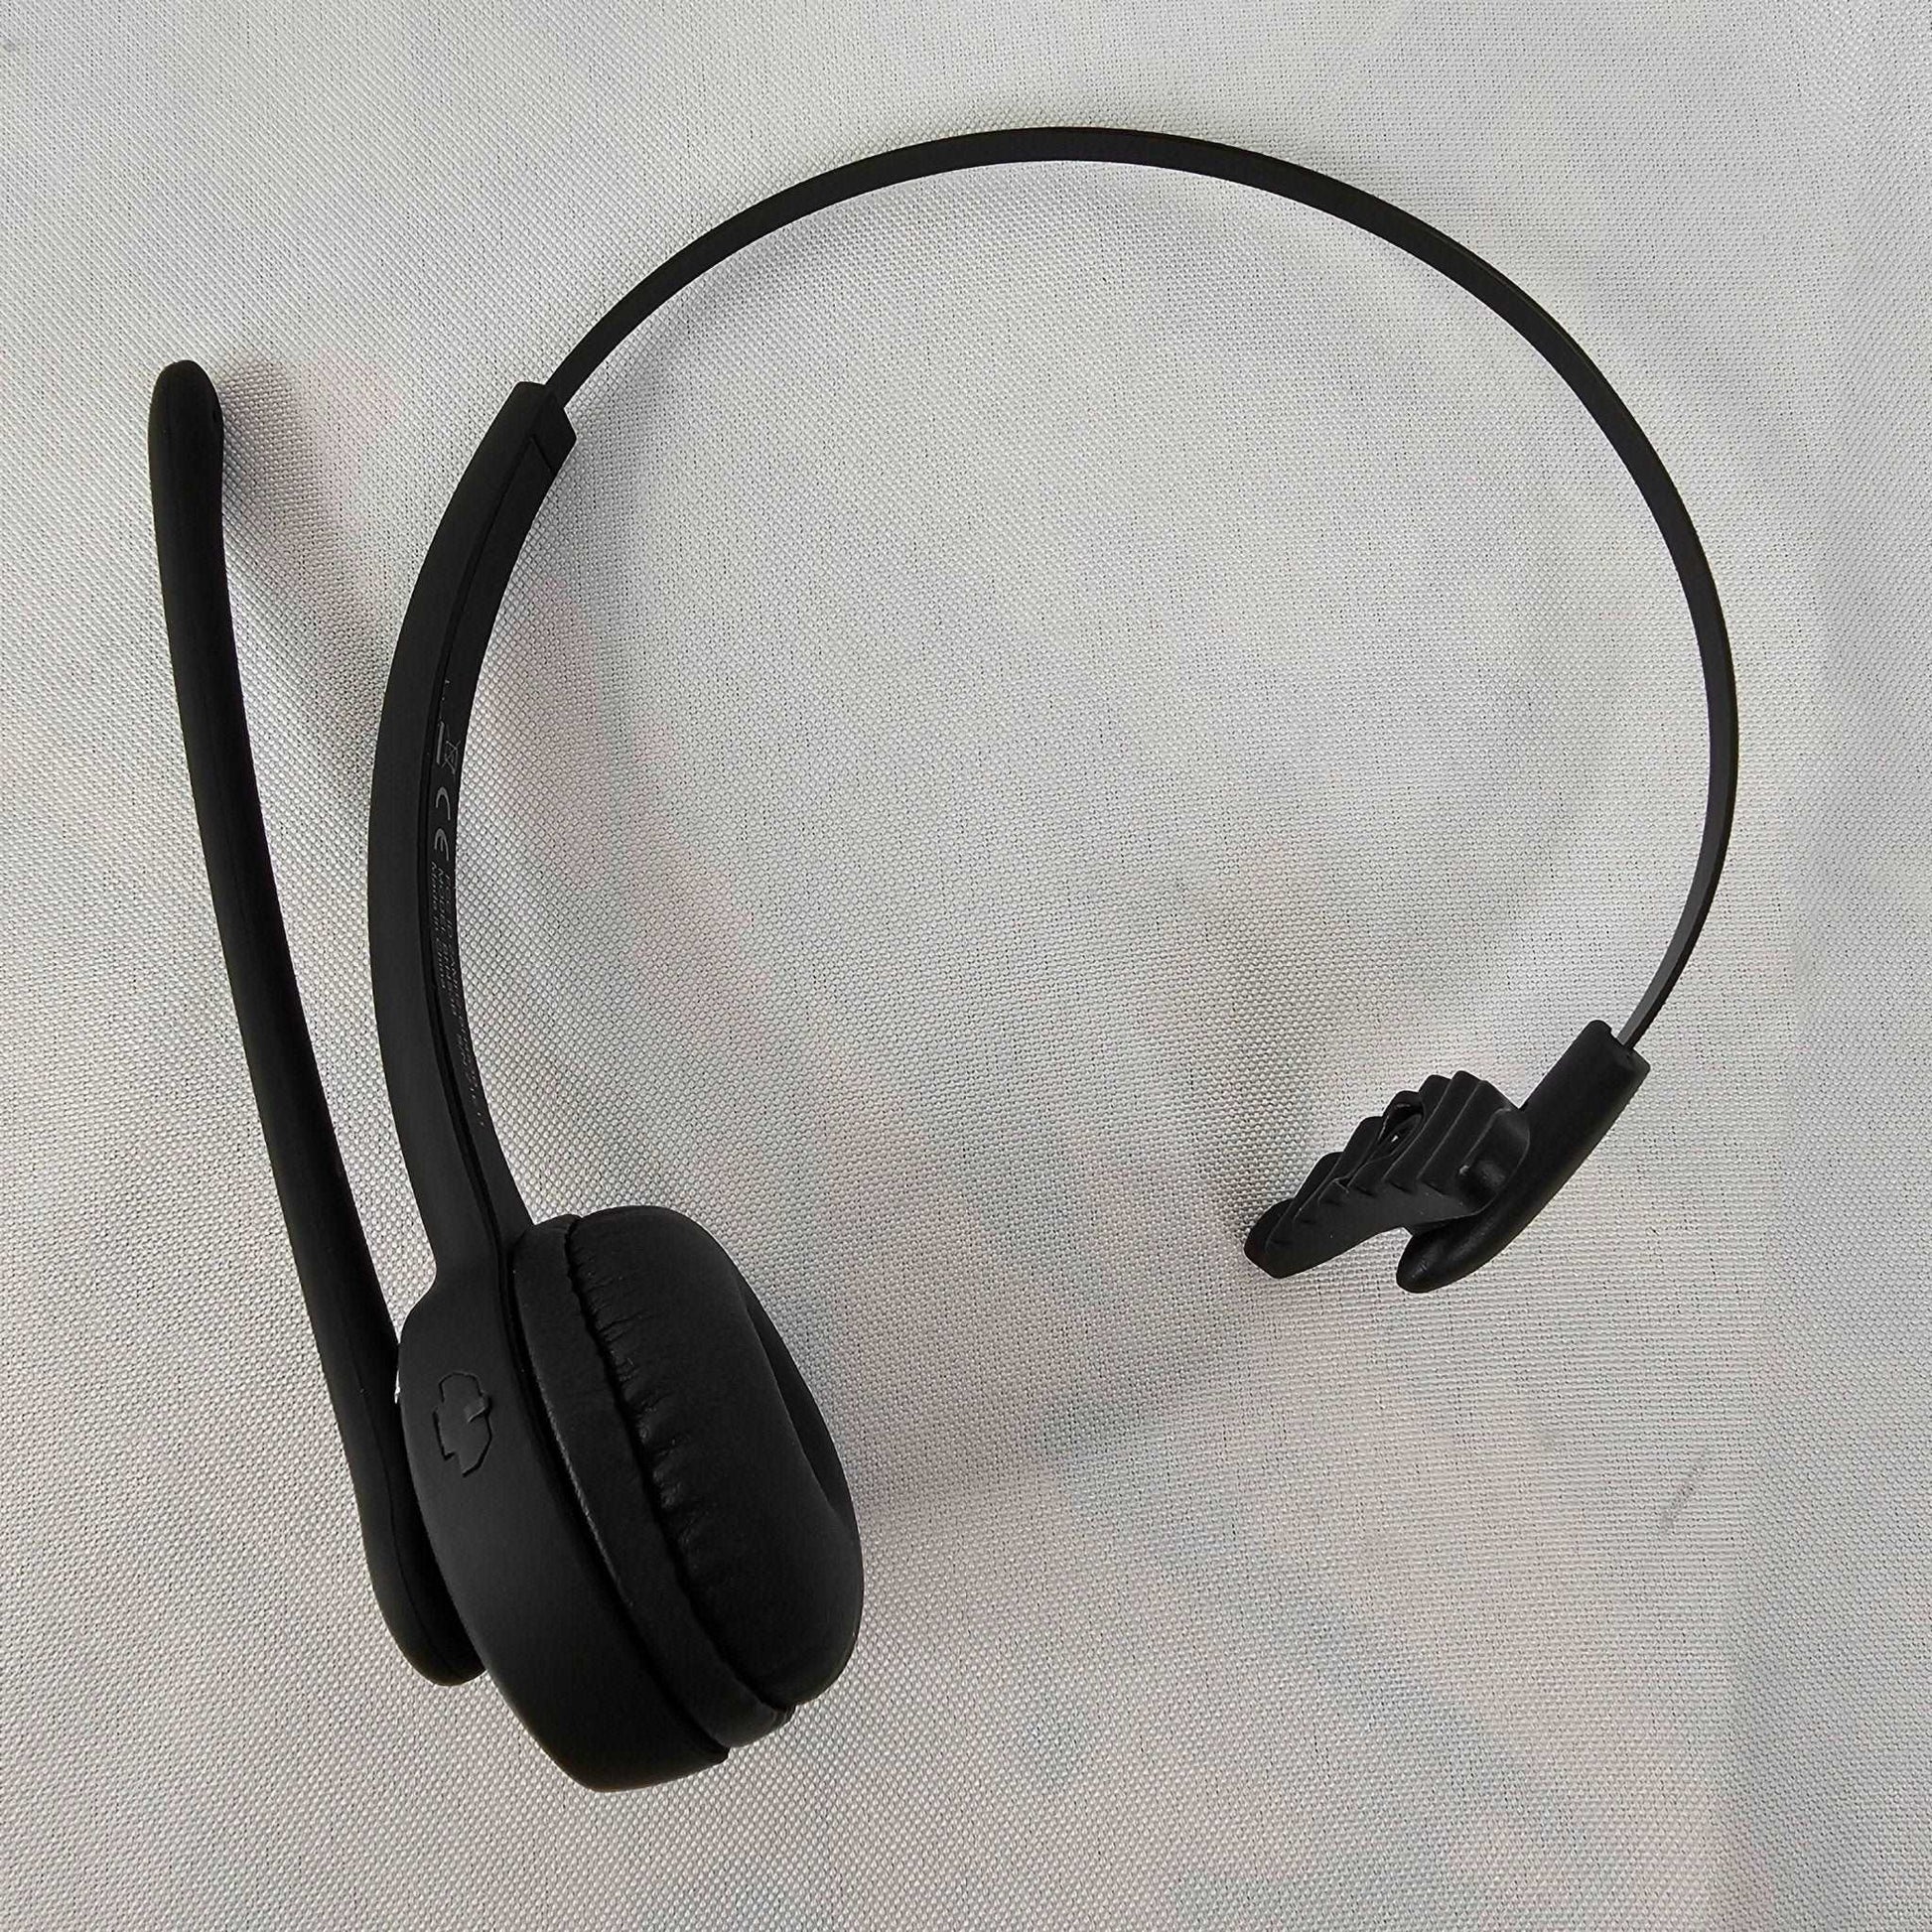 Bluetooth Headset Mpow BH453B - DQ Distribution